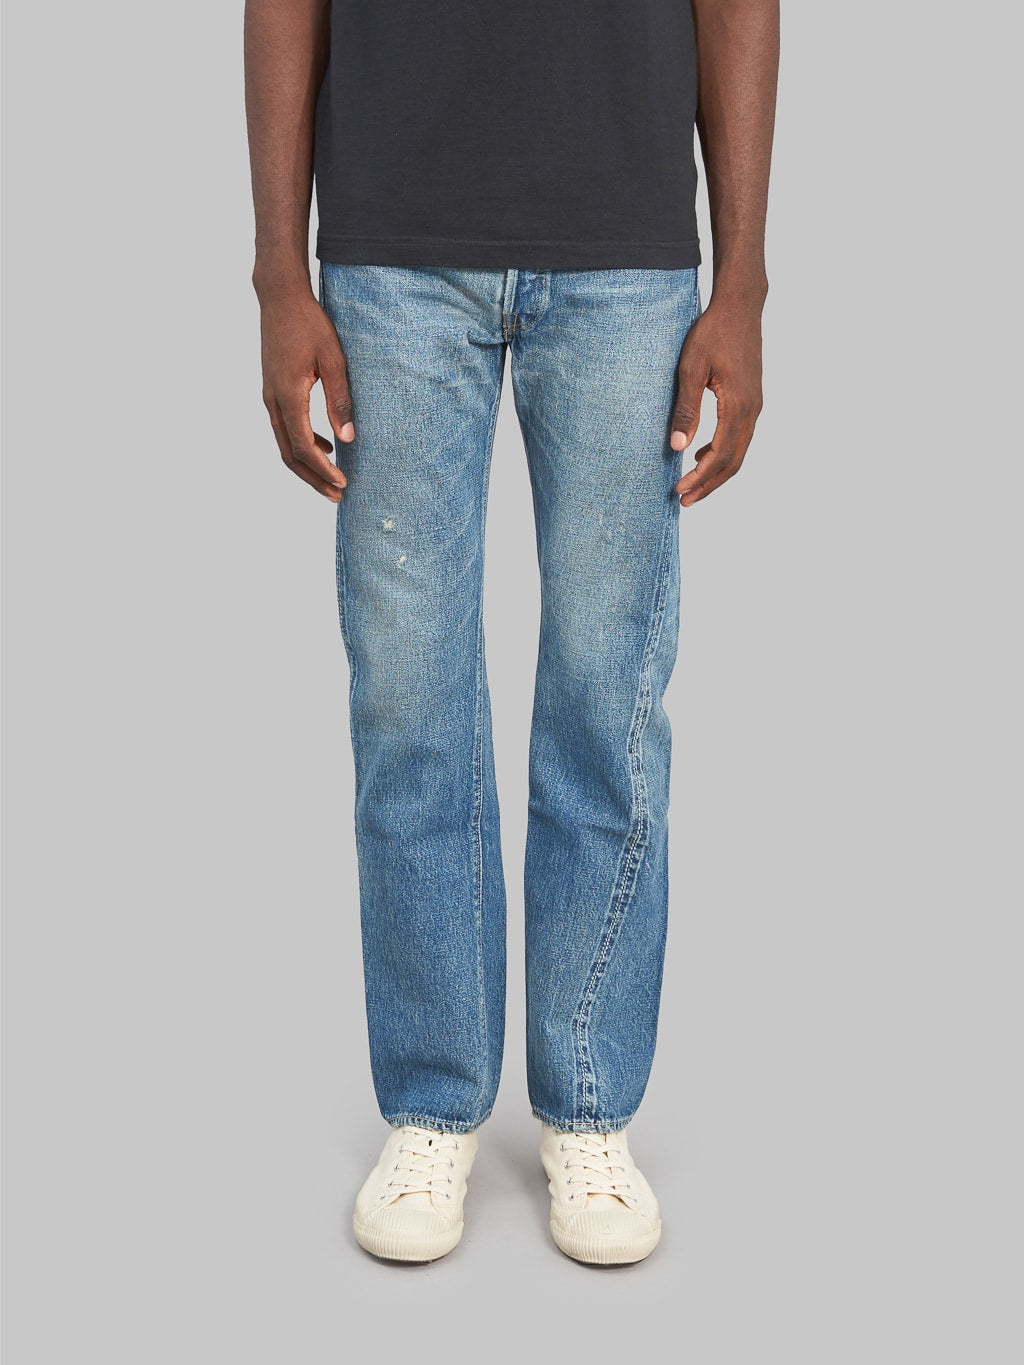 Fullcount 1108 Dartford Slim Straight Jeans no shrinkage